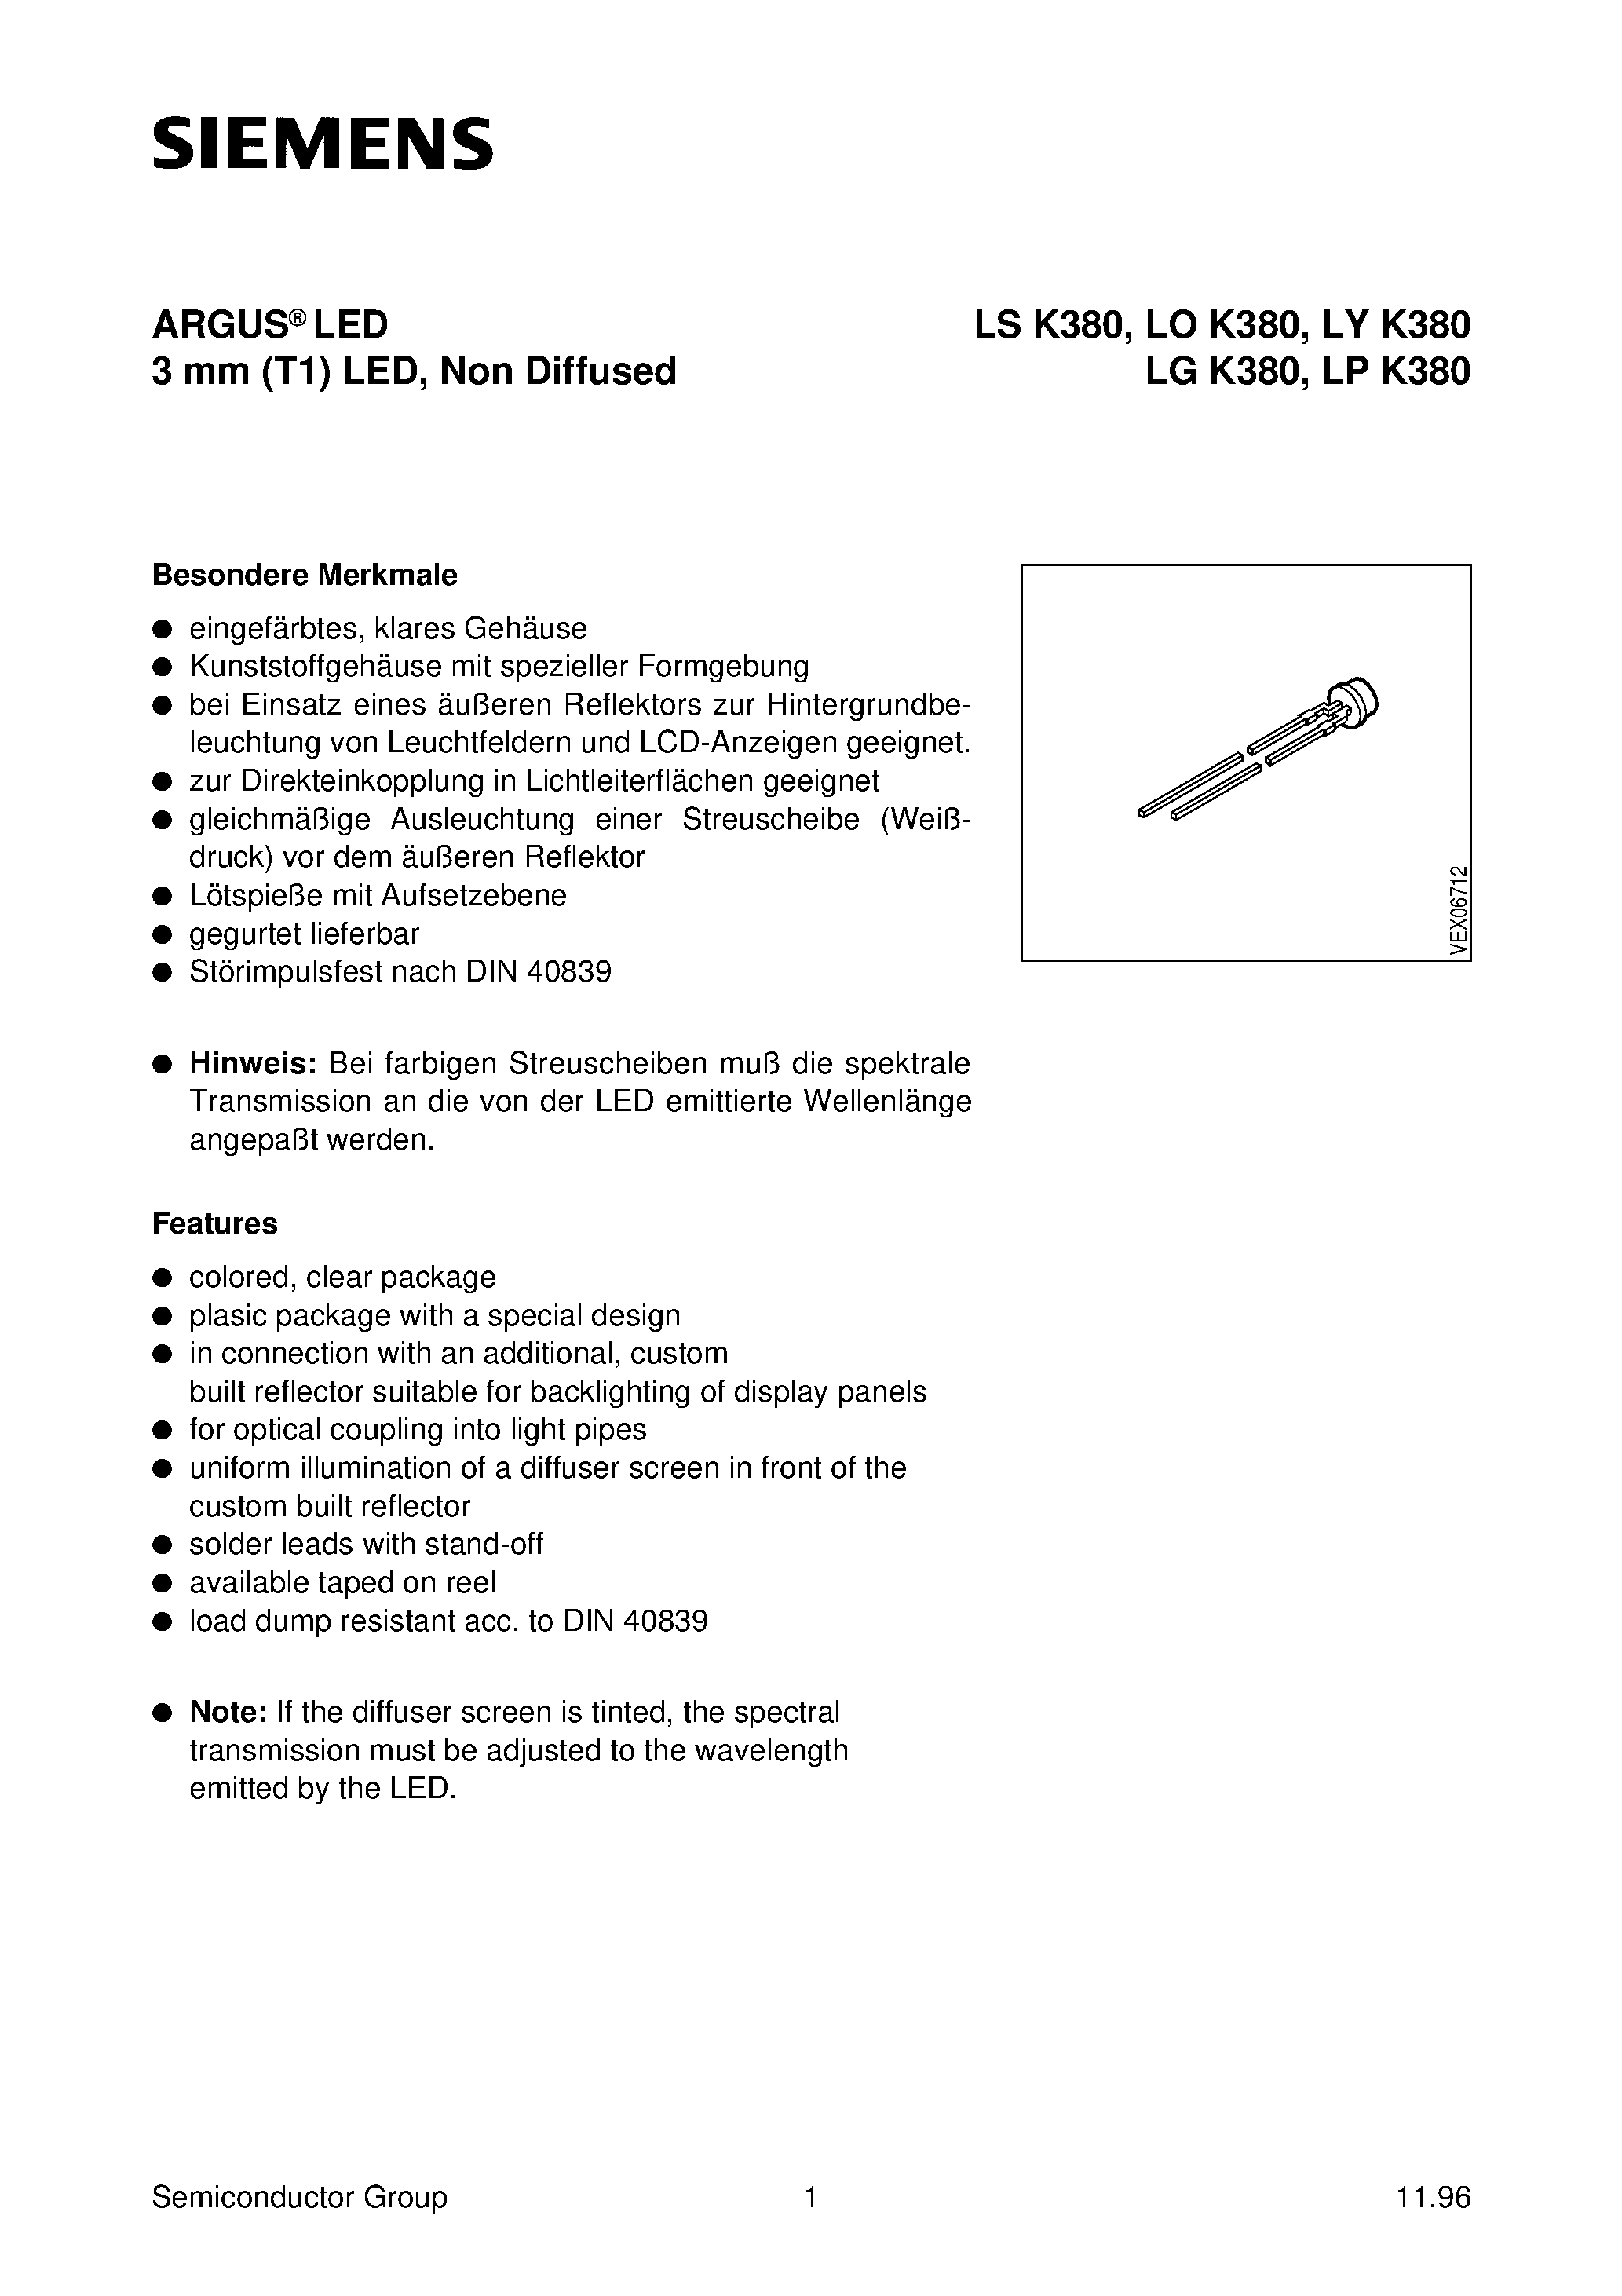 Даташит LYK380-N - ARGUS LED 3 mm T1 LED/ Non Diffused страница 1